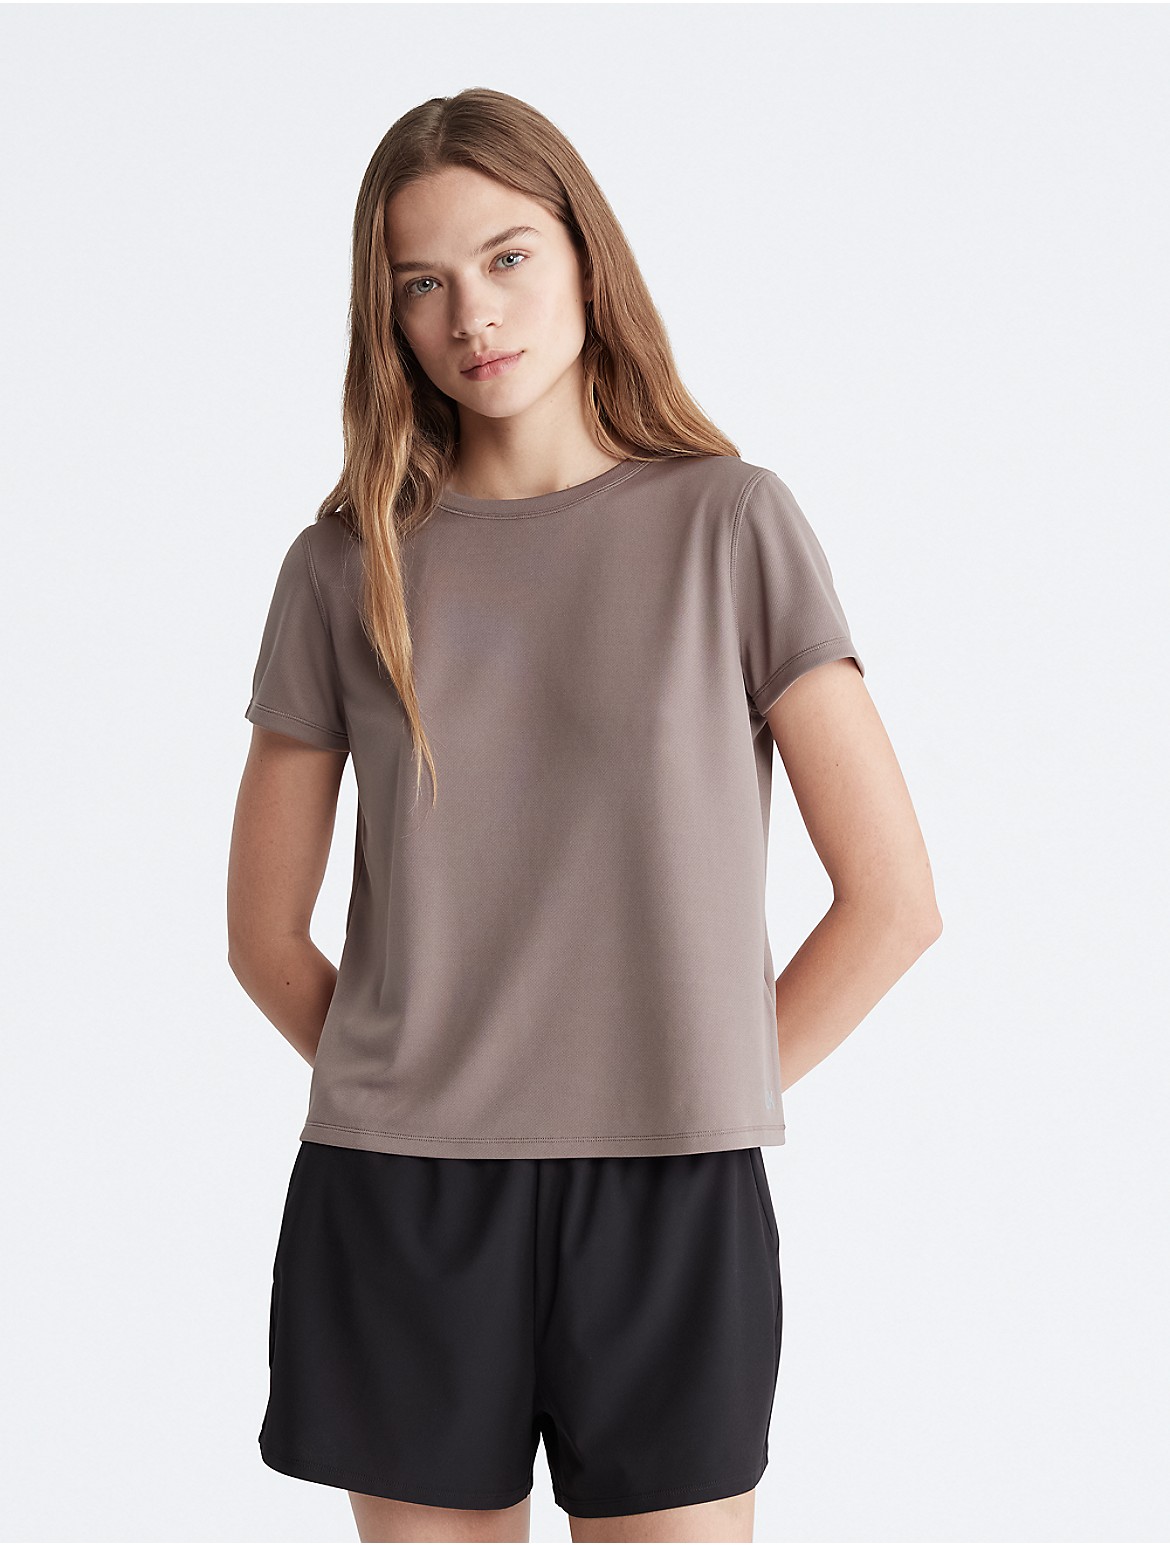 Calvin Klein Women's Performance Tech Pique T-Shirt - Brown - L